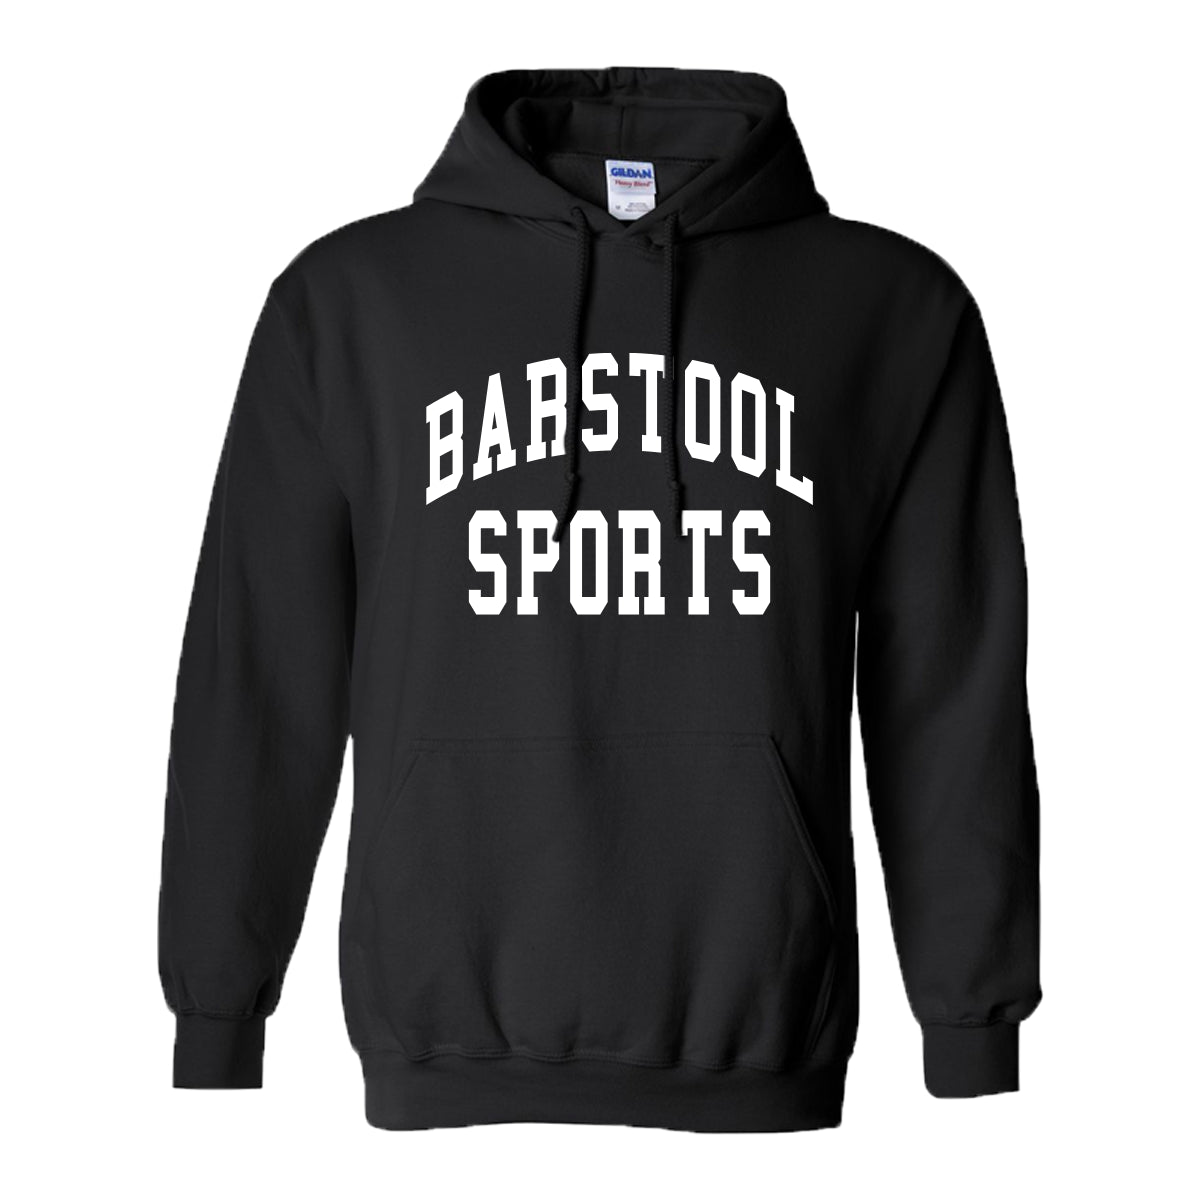 Barstool Sports Hoodie - Barstool Sports Canada Hoodies & Sweatshirts